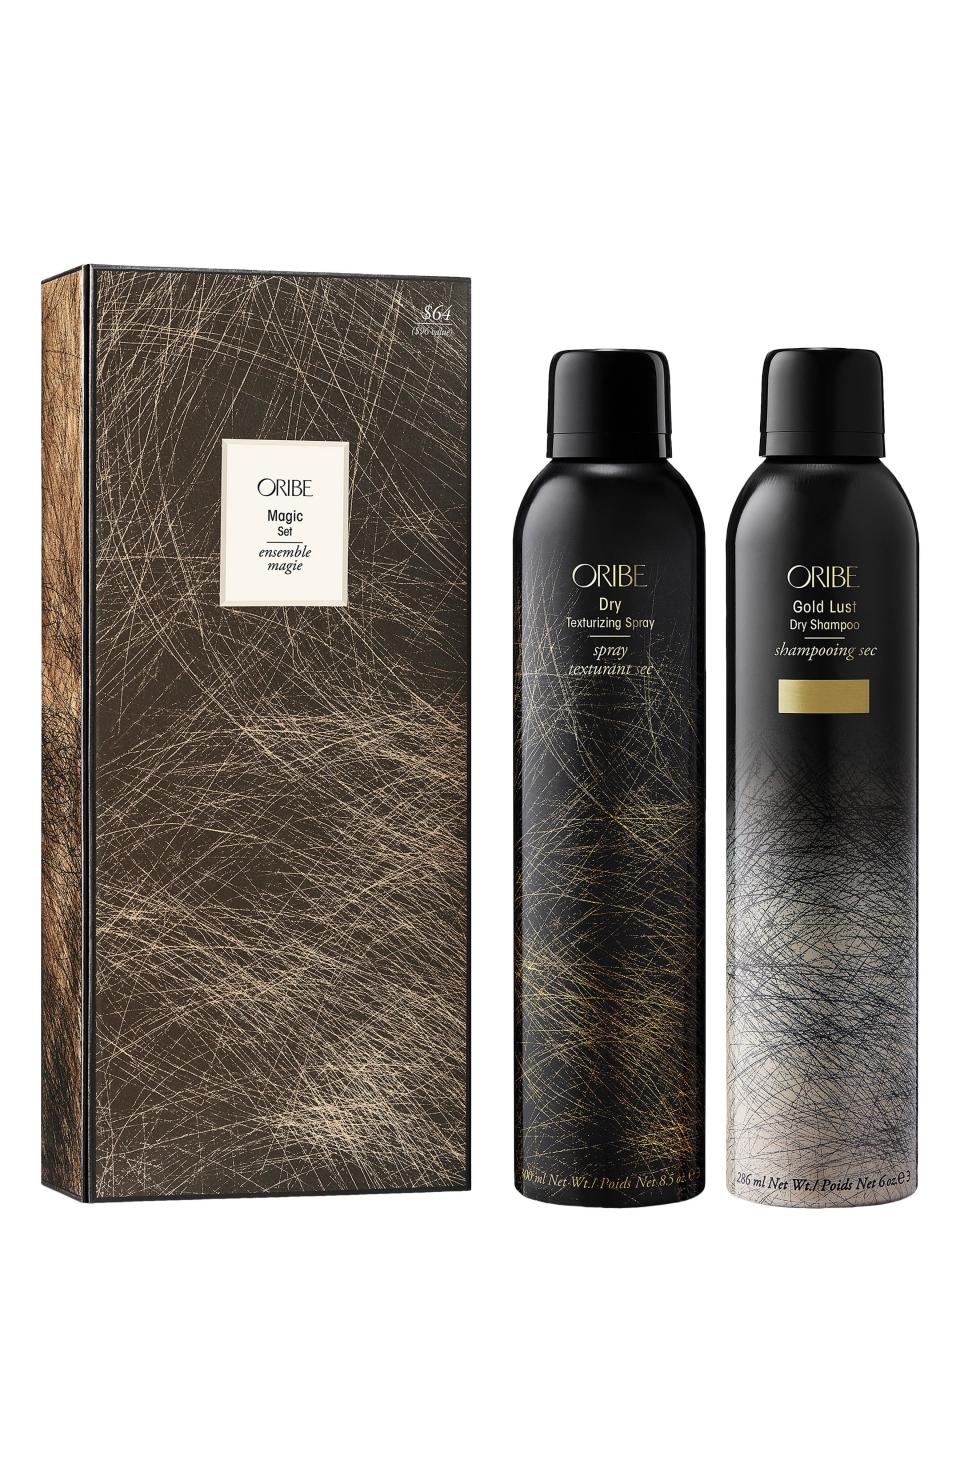 30) Magic Duo Full Size Gold Lust Dry Shampoo & Dry Texturizing Spray Set ($96 Value)